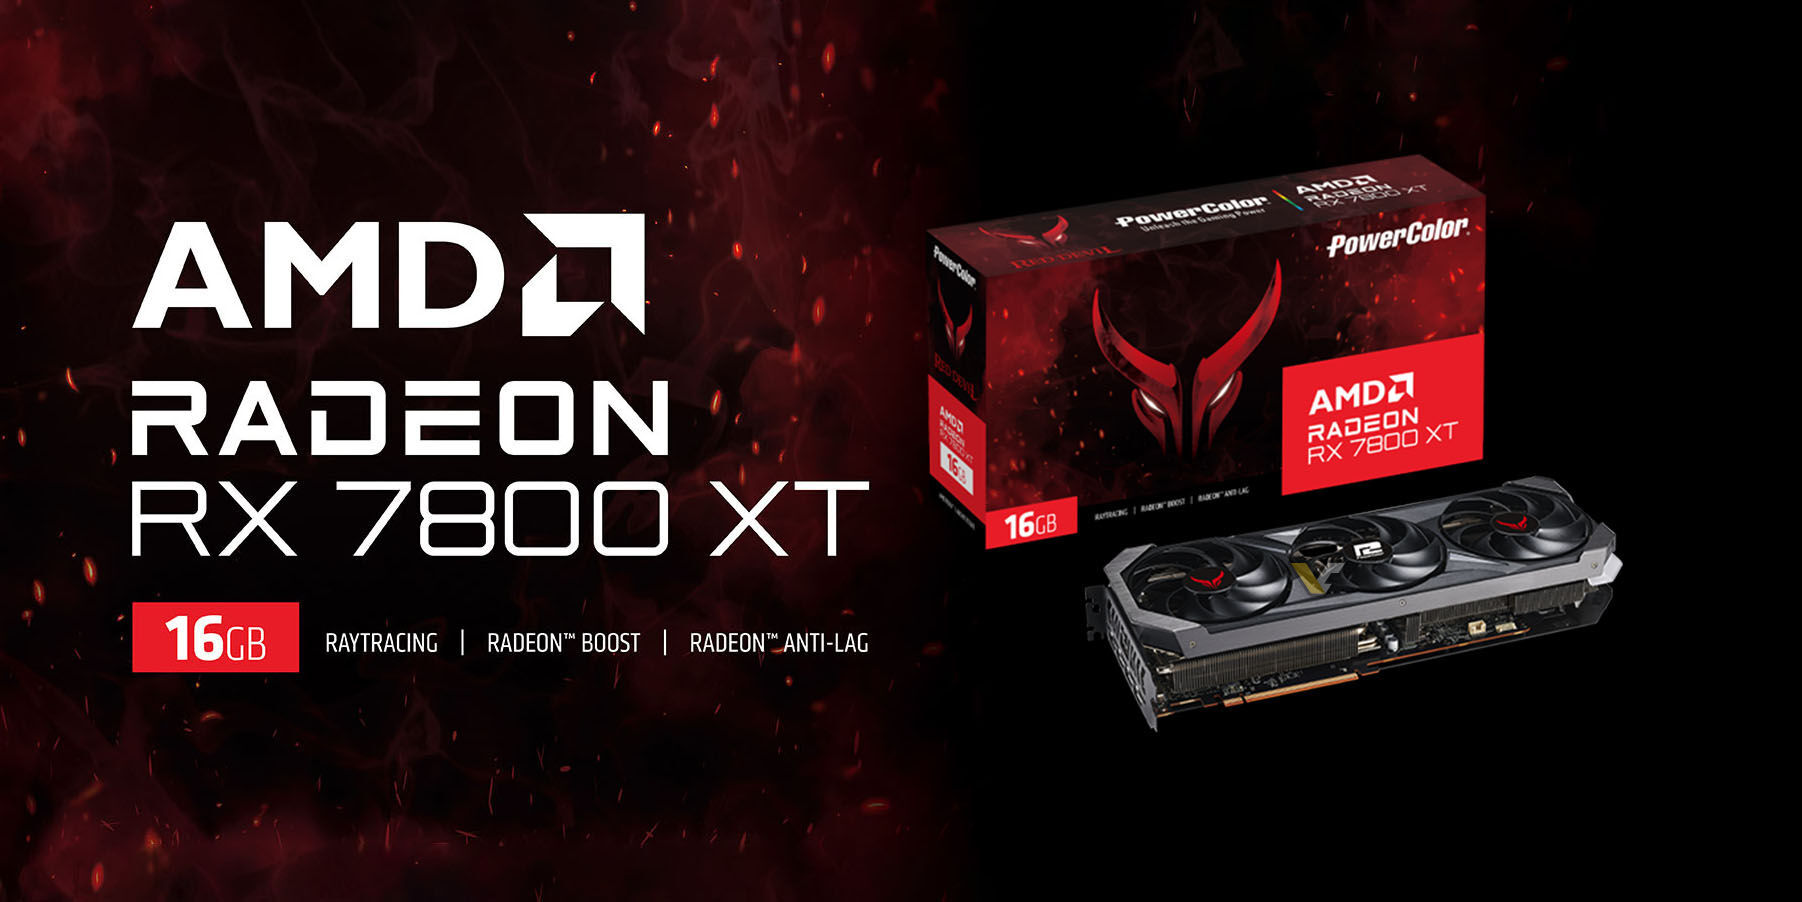 AMD's new Radeon RX 7800 XT accidentally, kinda confirmed